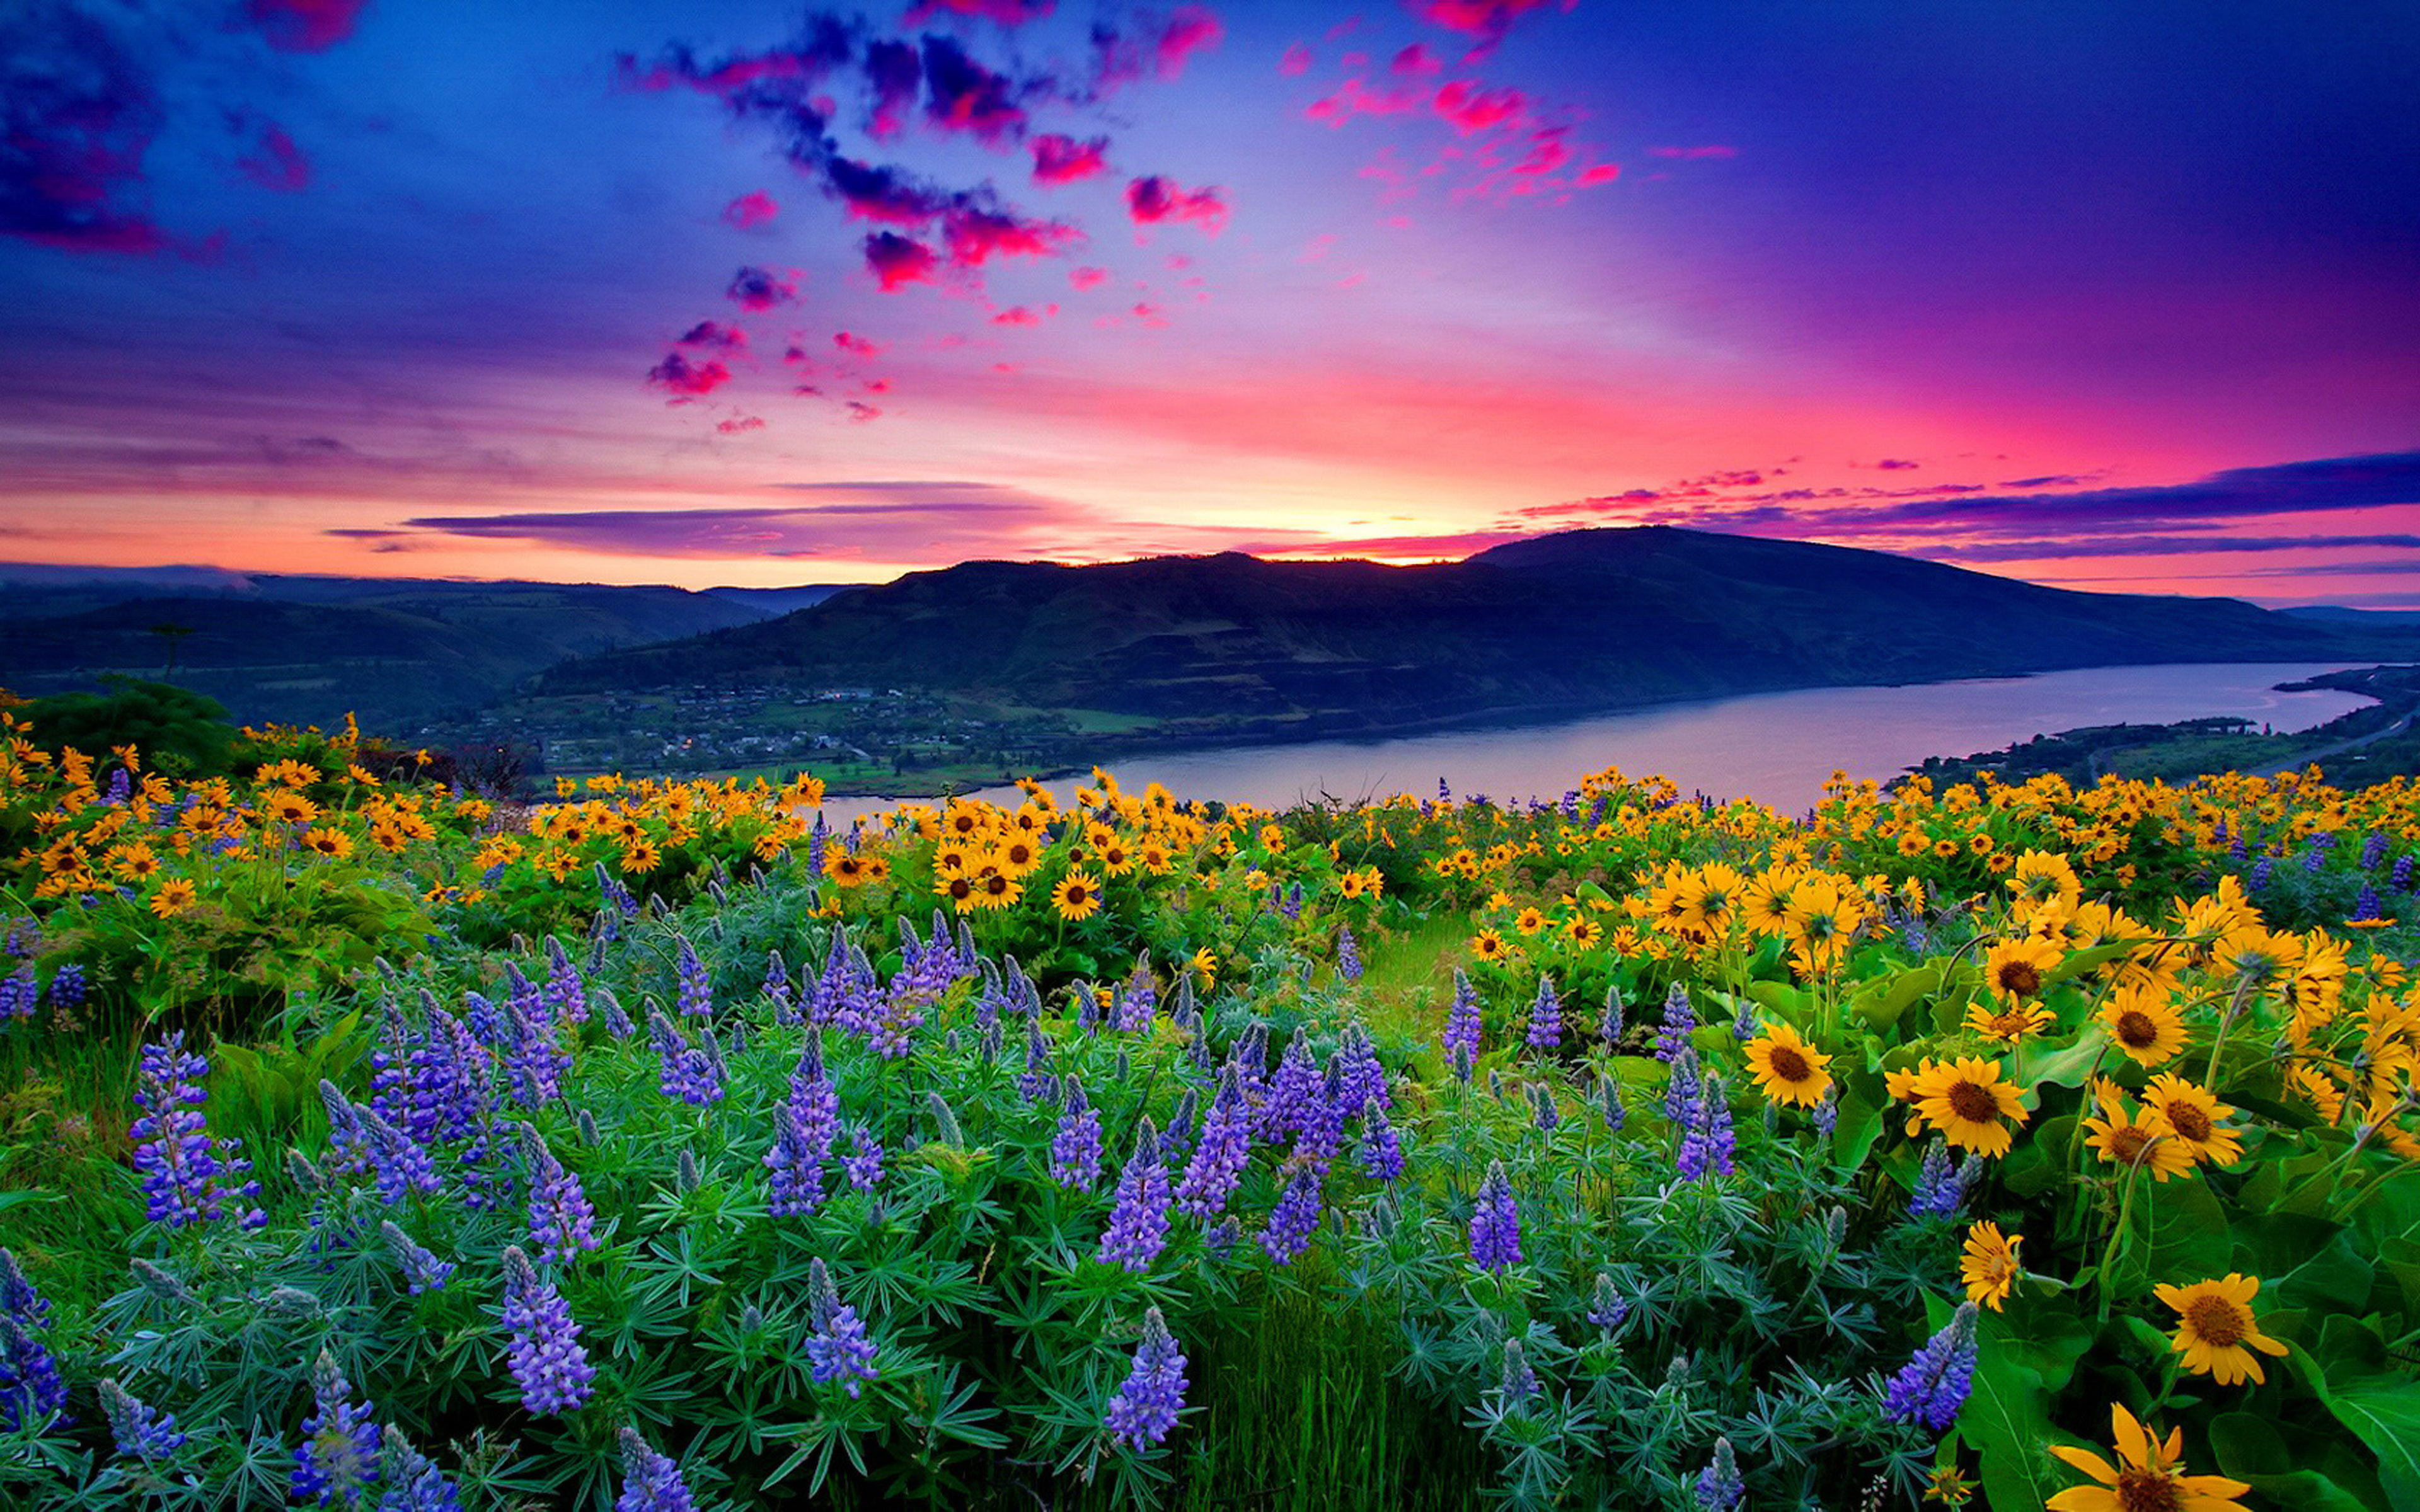 Nature Landscape Yellow Flowers And Blue Mountain Lake Hills Red Cloud Sunset Hd Desktop Wallpaper 3840×2400